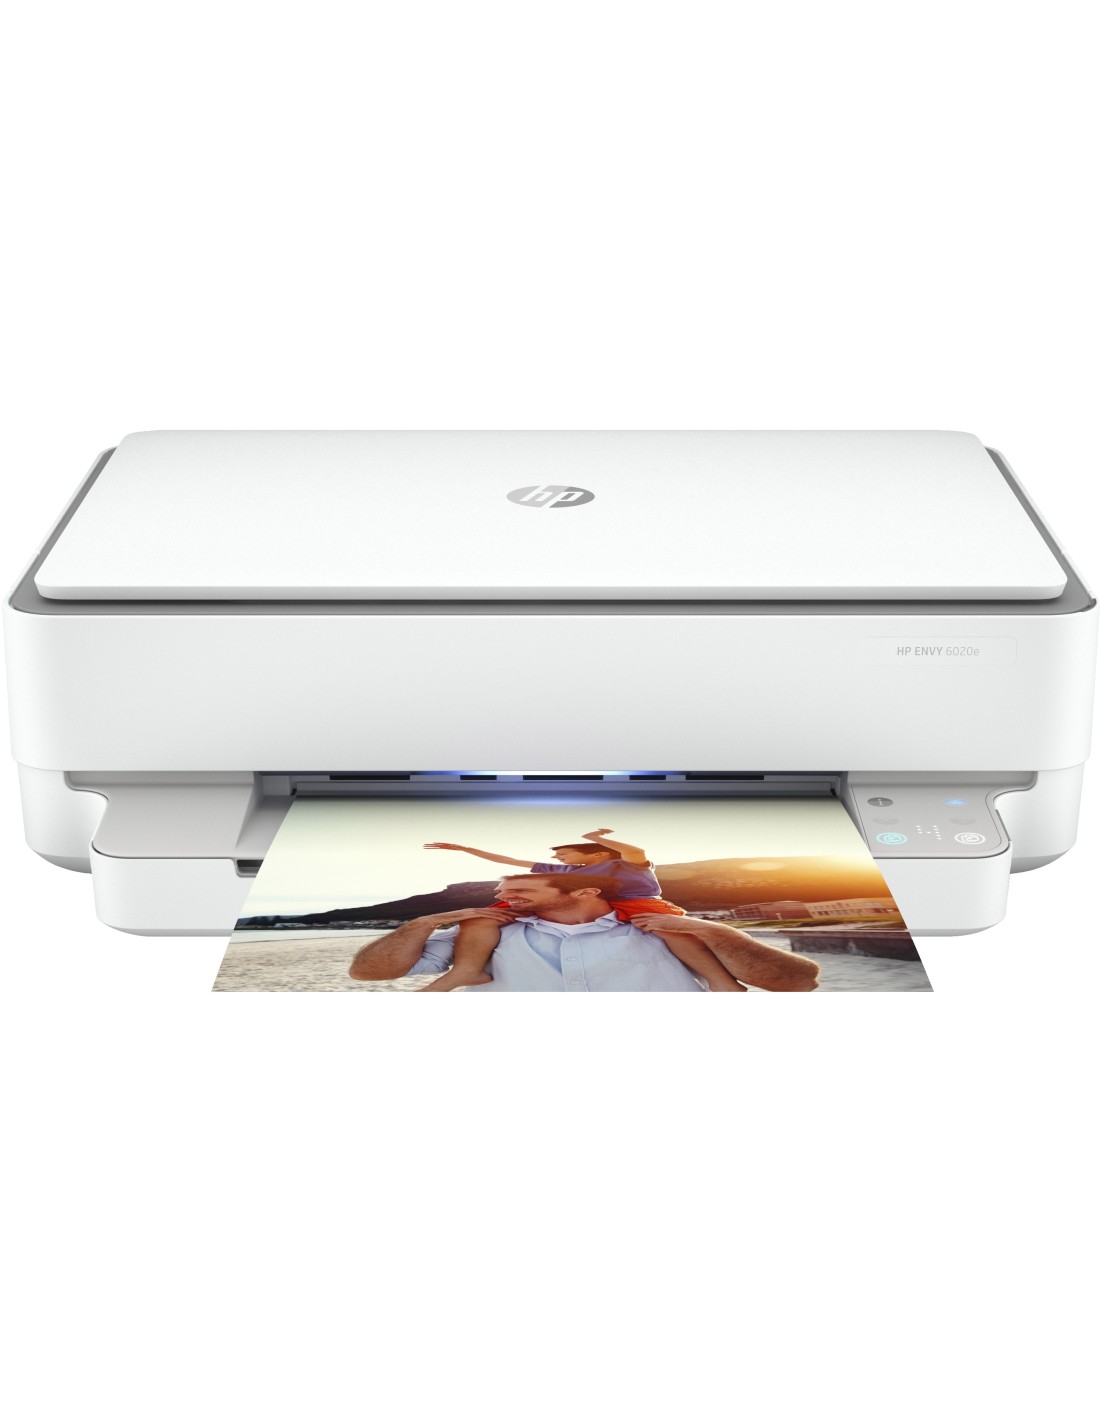 HP ENVY Impresora multifunción HP 6020e, Color, Impresora para